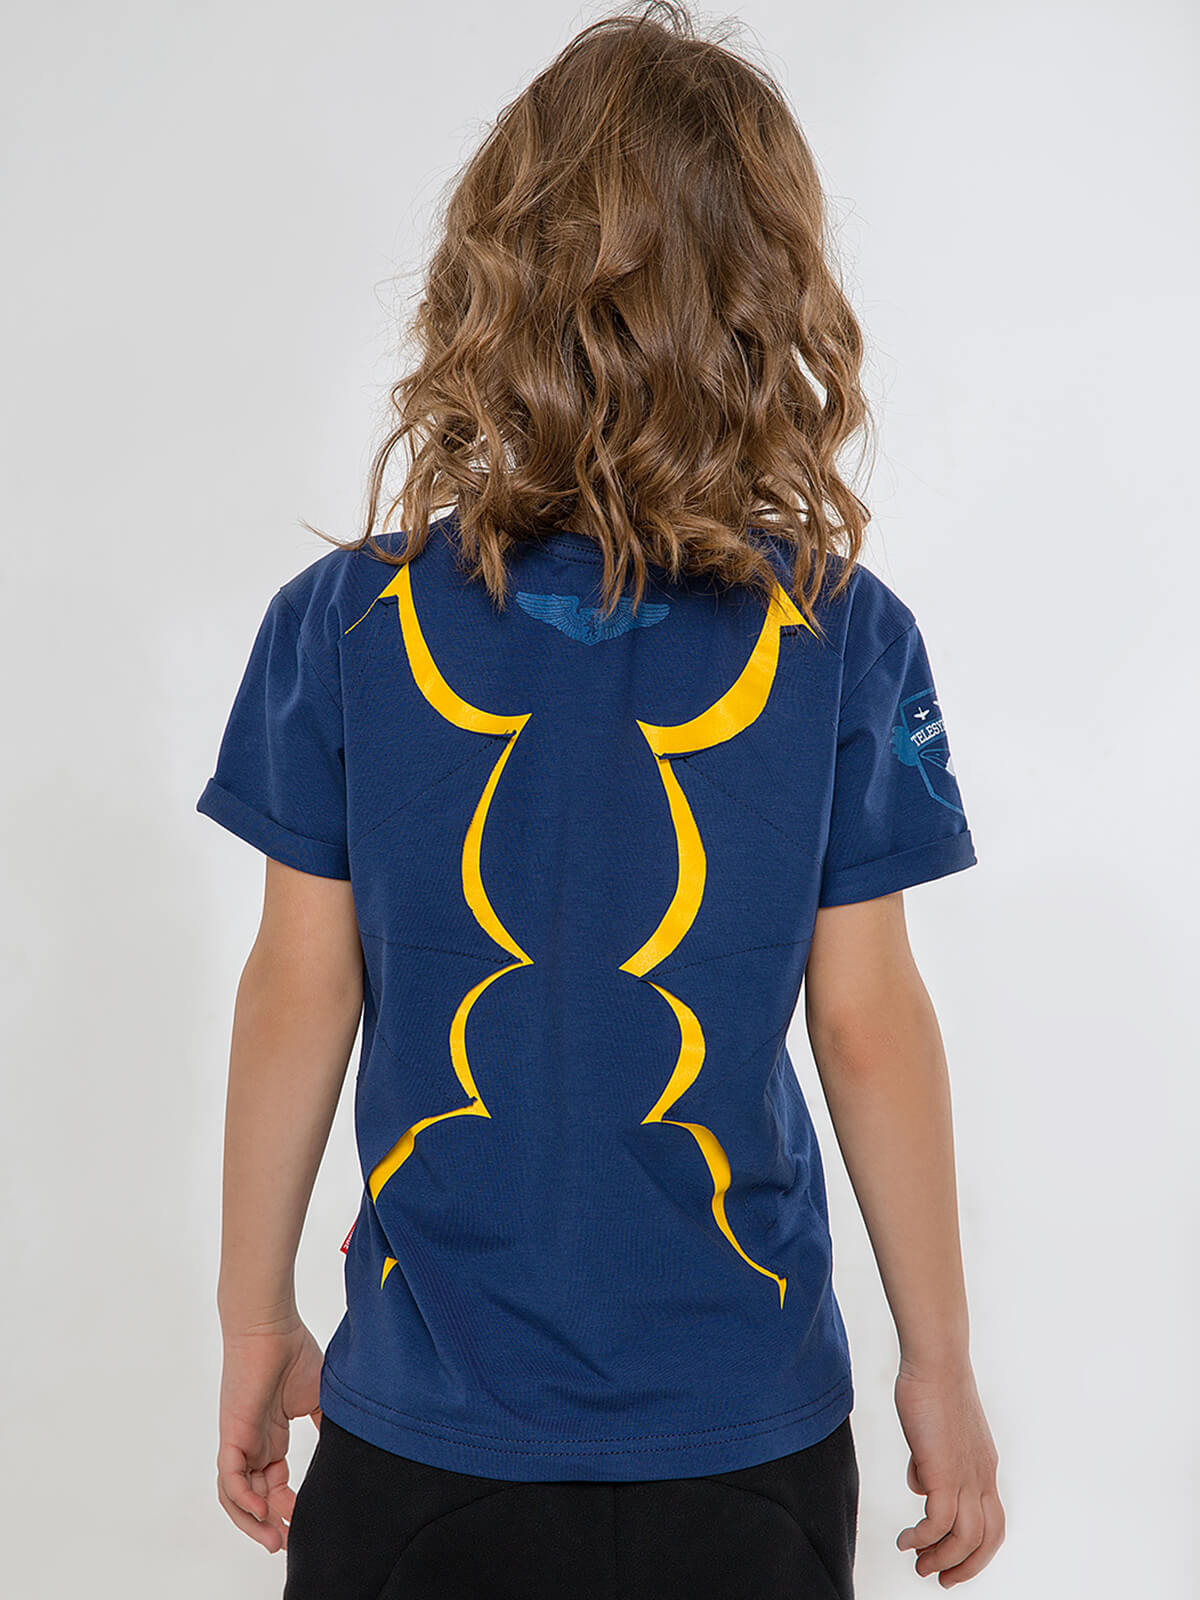 Kids T-Shirt Dragon. Color navy blue. 
Material: 95% cotton, 5% spandex.